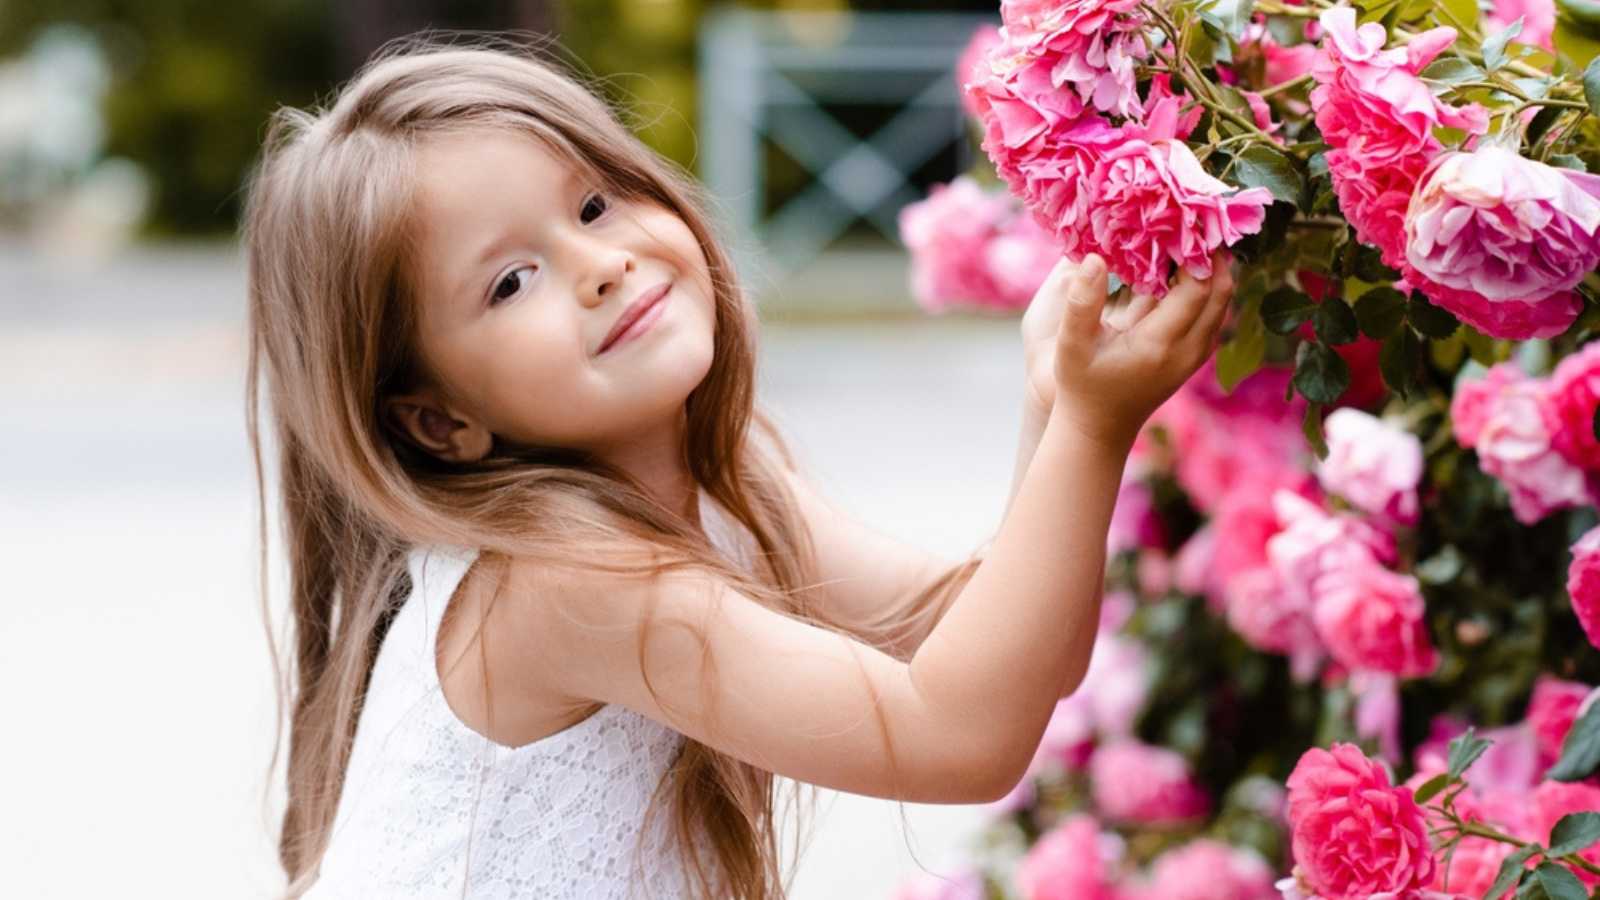 Child near flowers